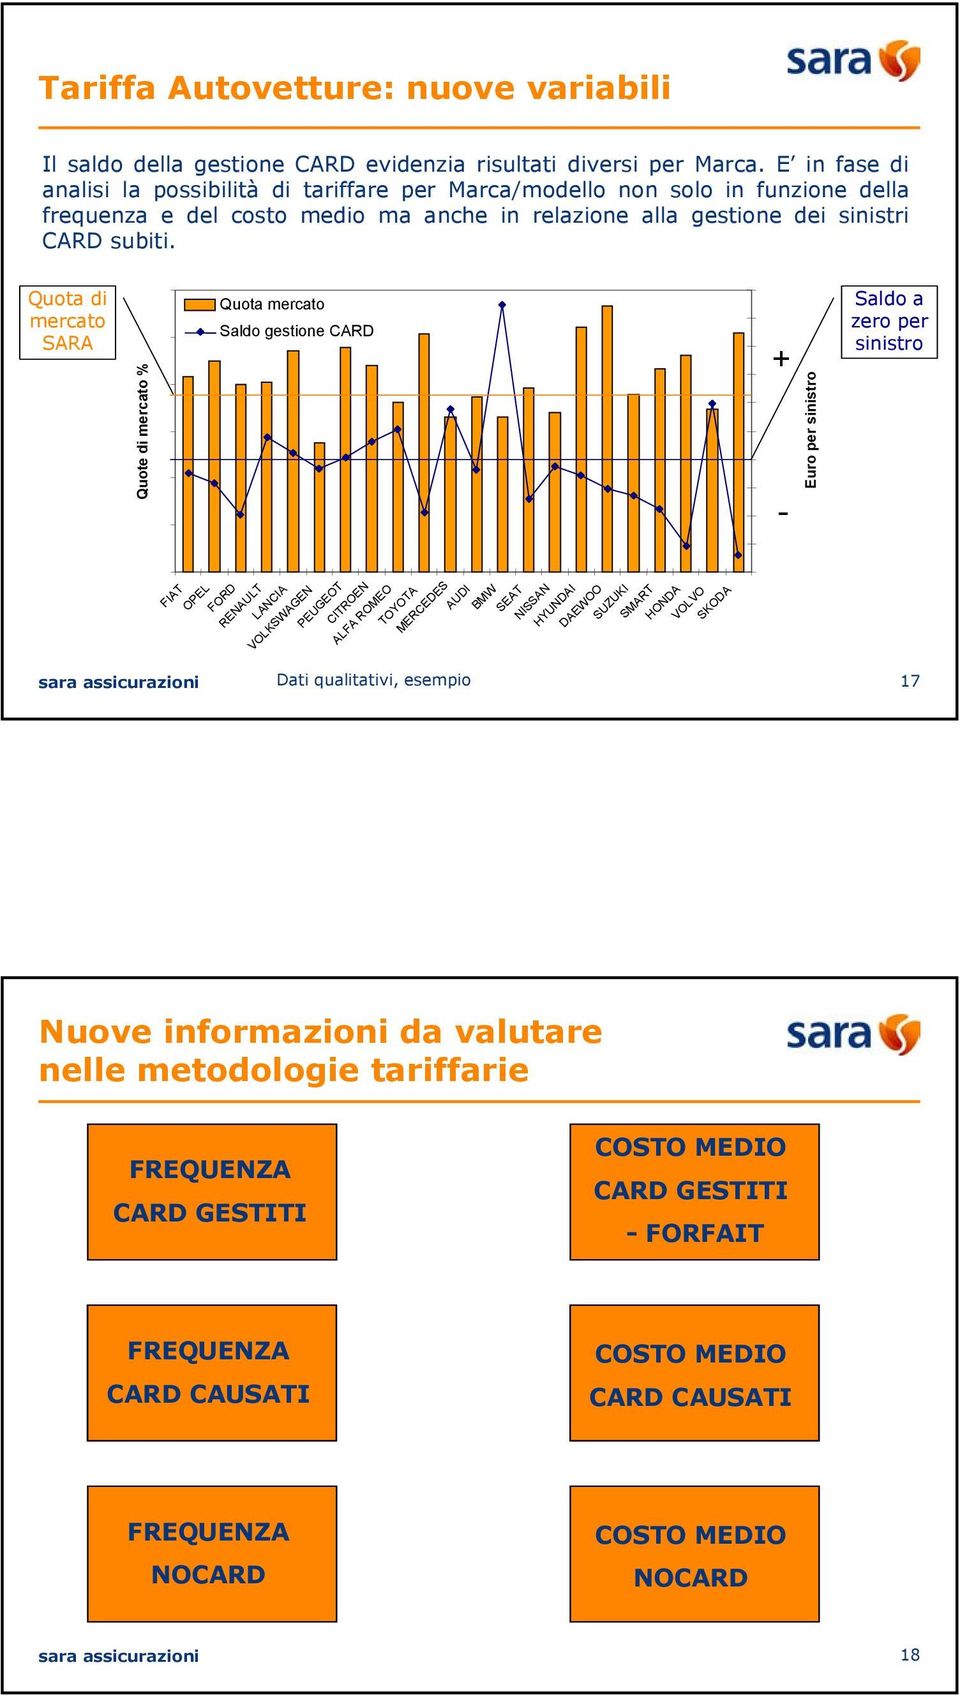 Quota di mercato SARA Quote di mercato % Quota mercato Saldo gestione CARD FIAT OPEL FORD RENAULT LANCIA VOLKSWAGEN PEUGEOT Dati qualitativi, esempio.